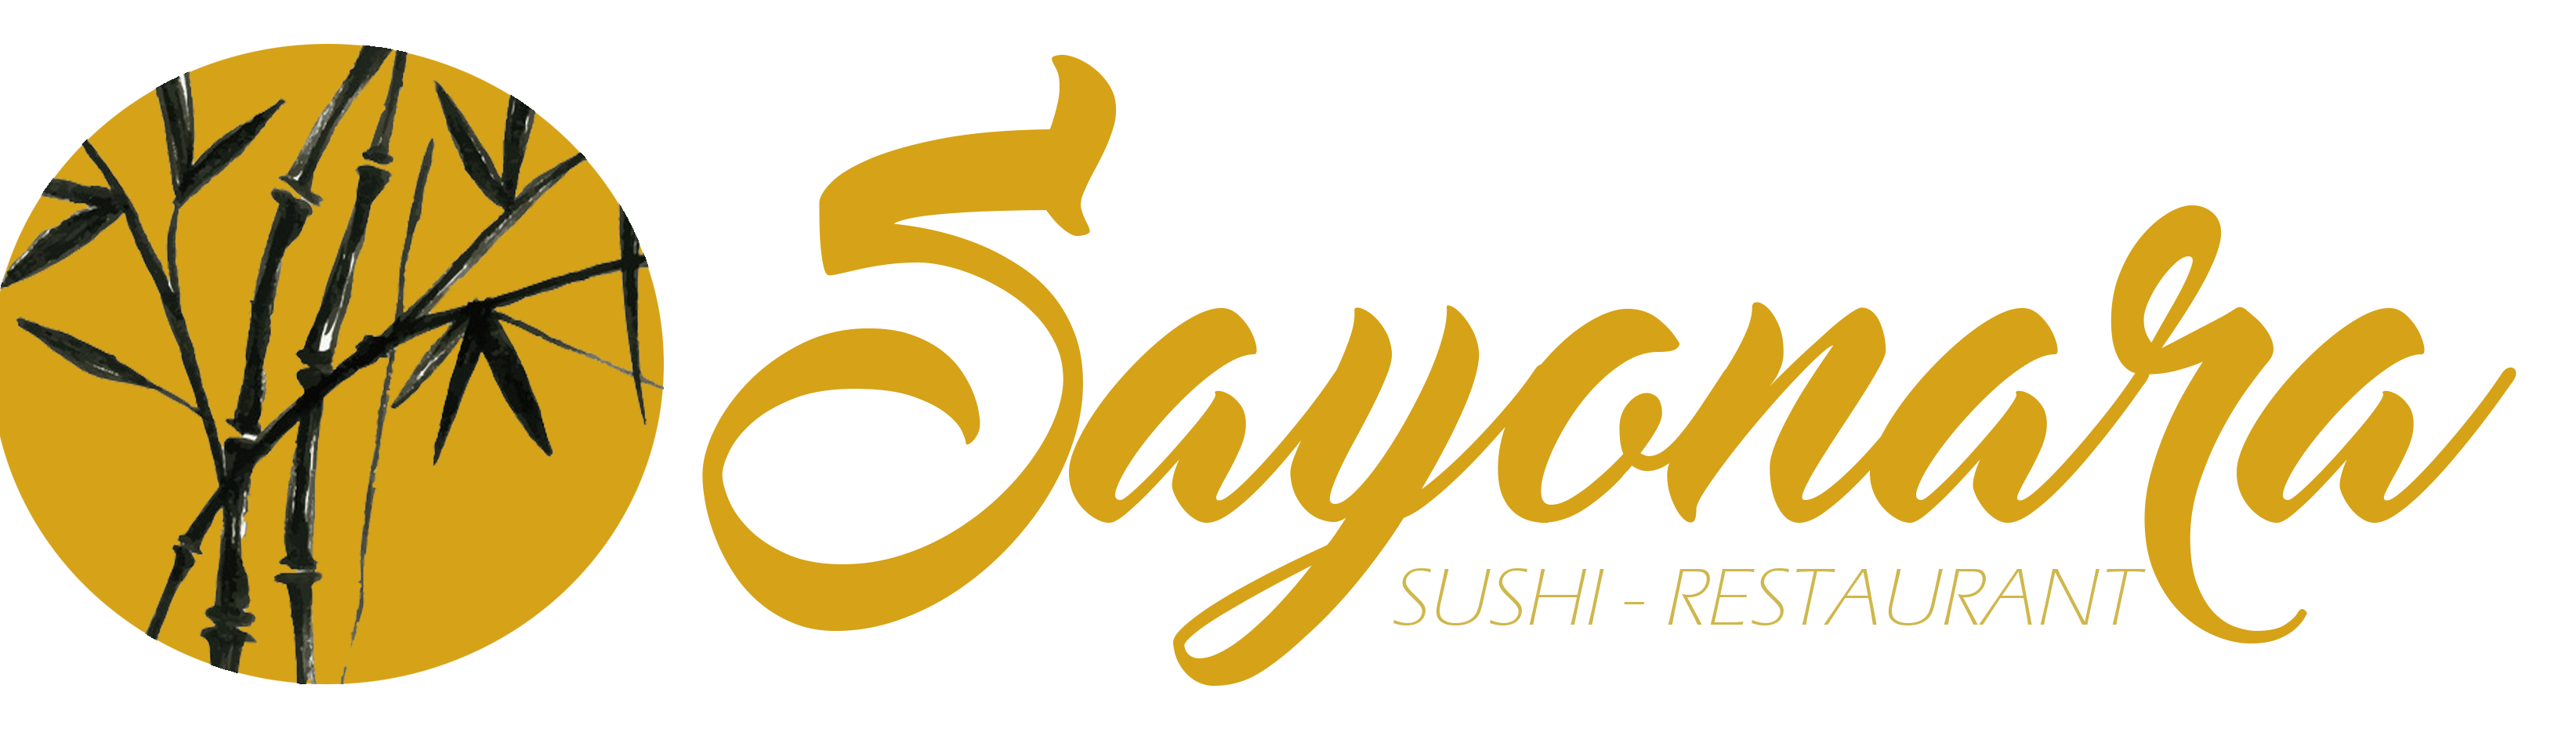 Sayonara Sushi | Disfruta Del Mejor Sushi